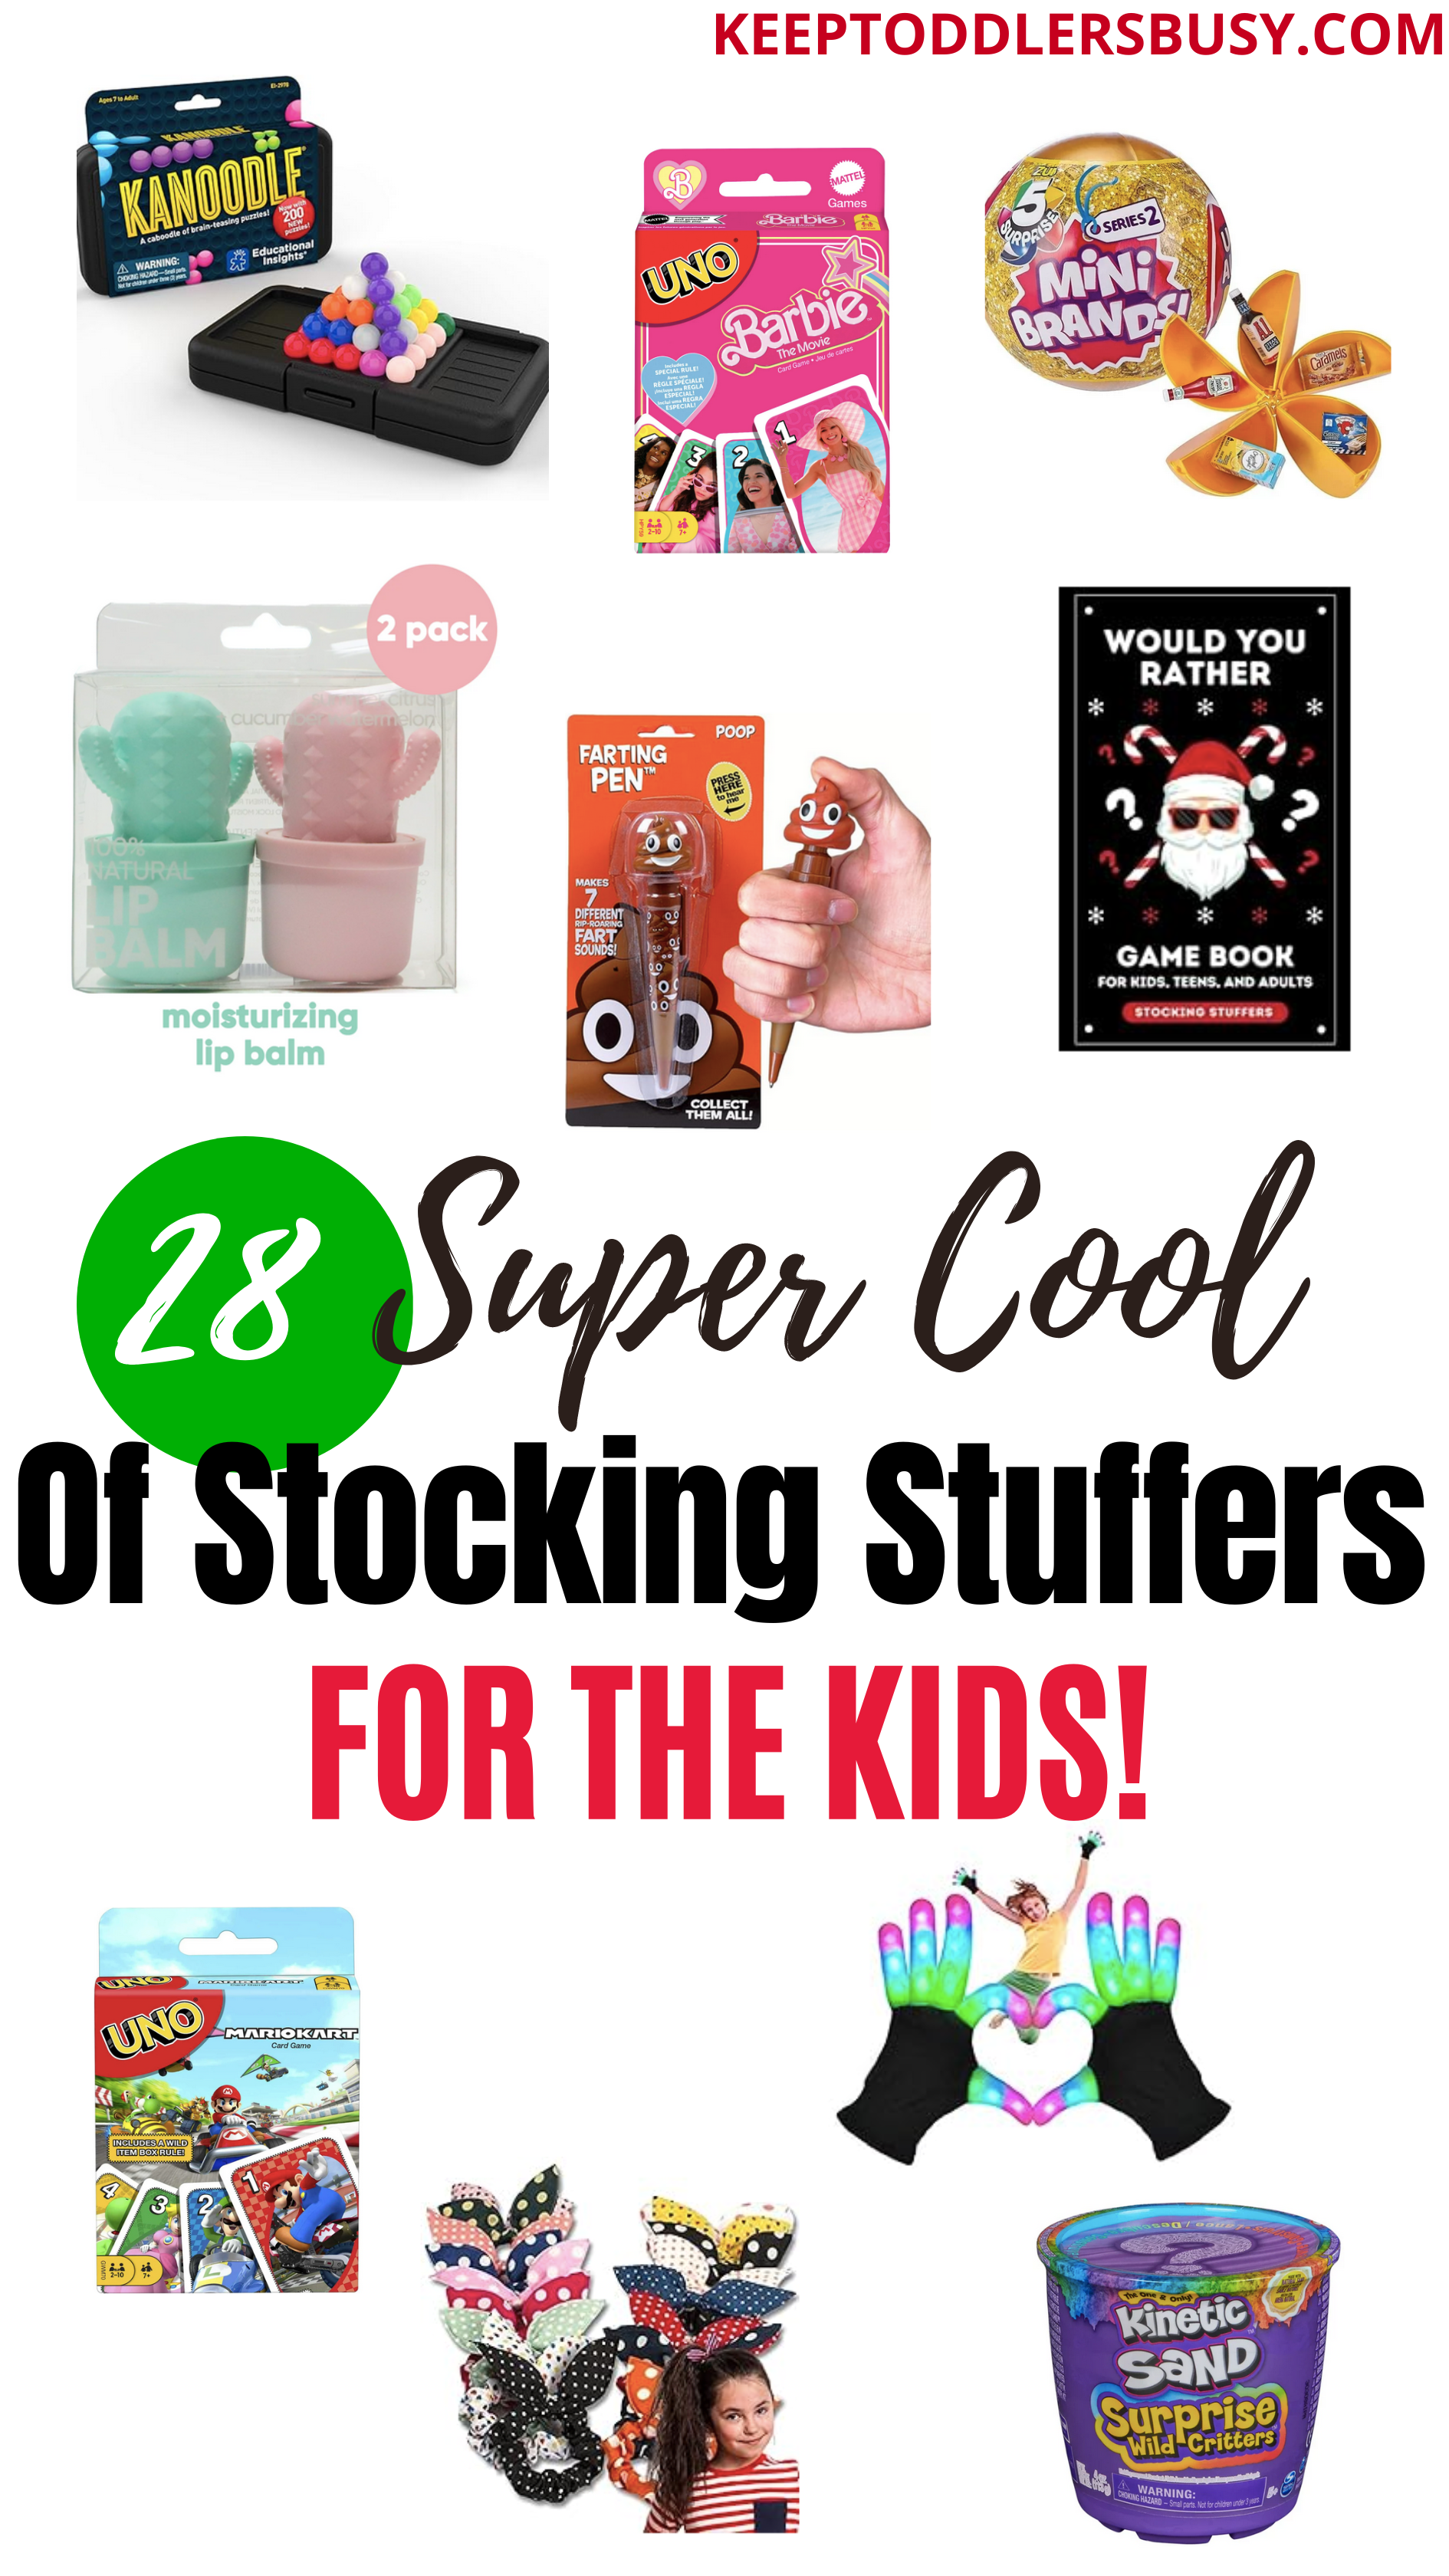 Unique Stocking Stuffer Ideas for Creative Kids